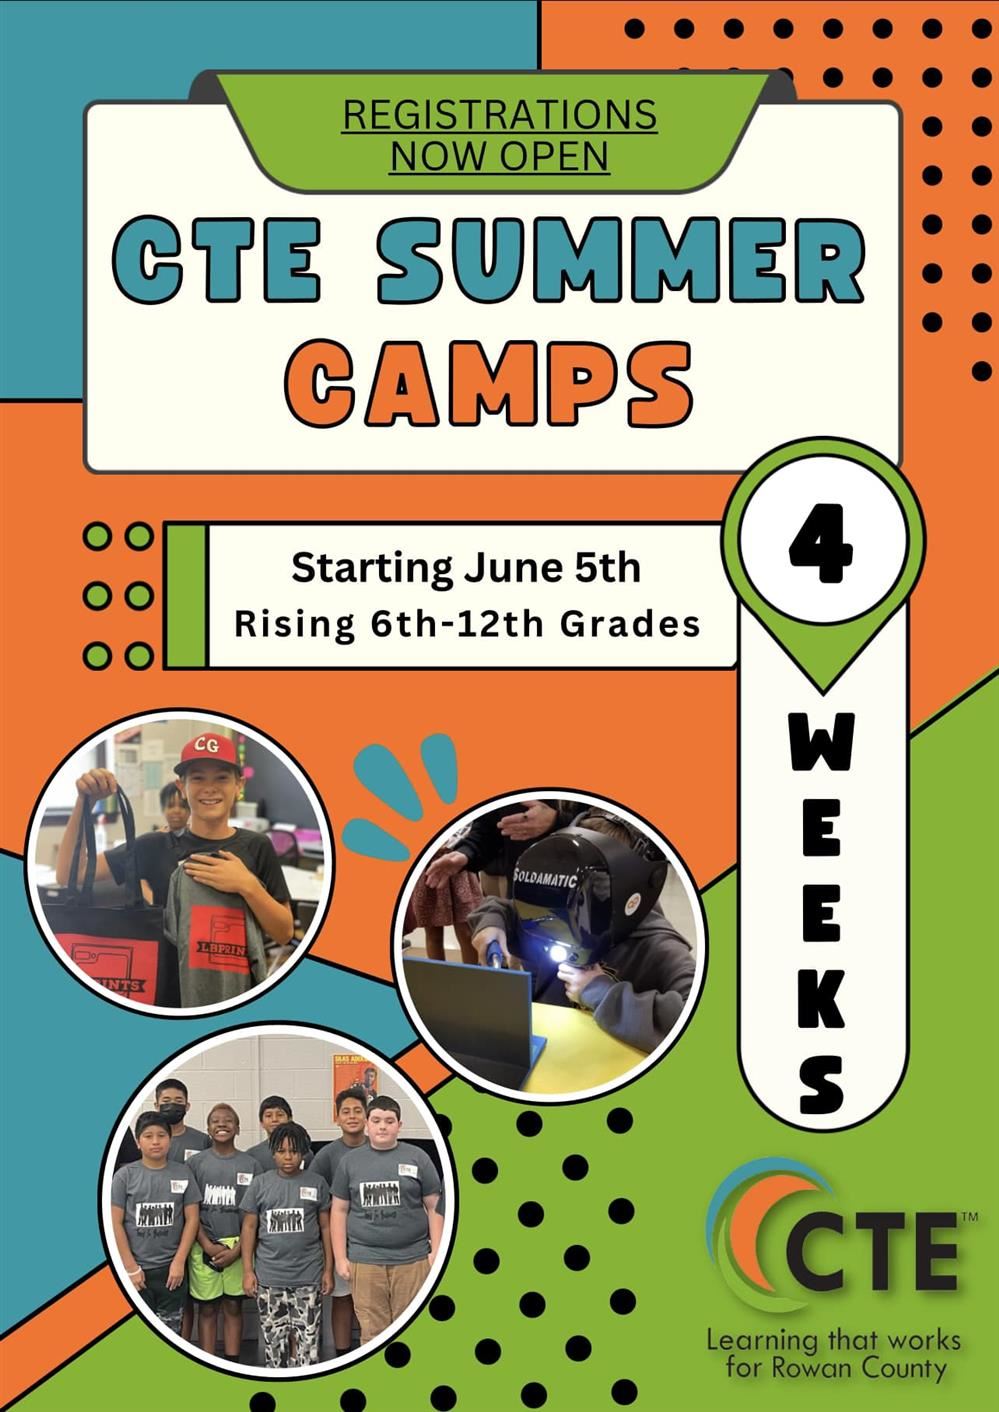 CTE SUMMER CAMP REGISTRATION IS OPEN!